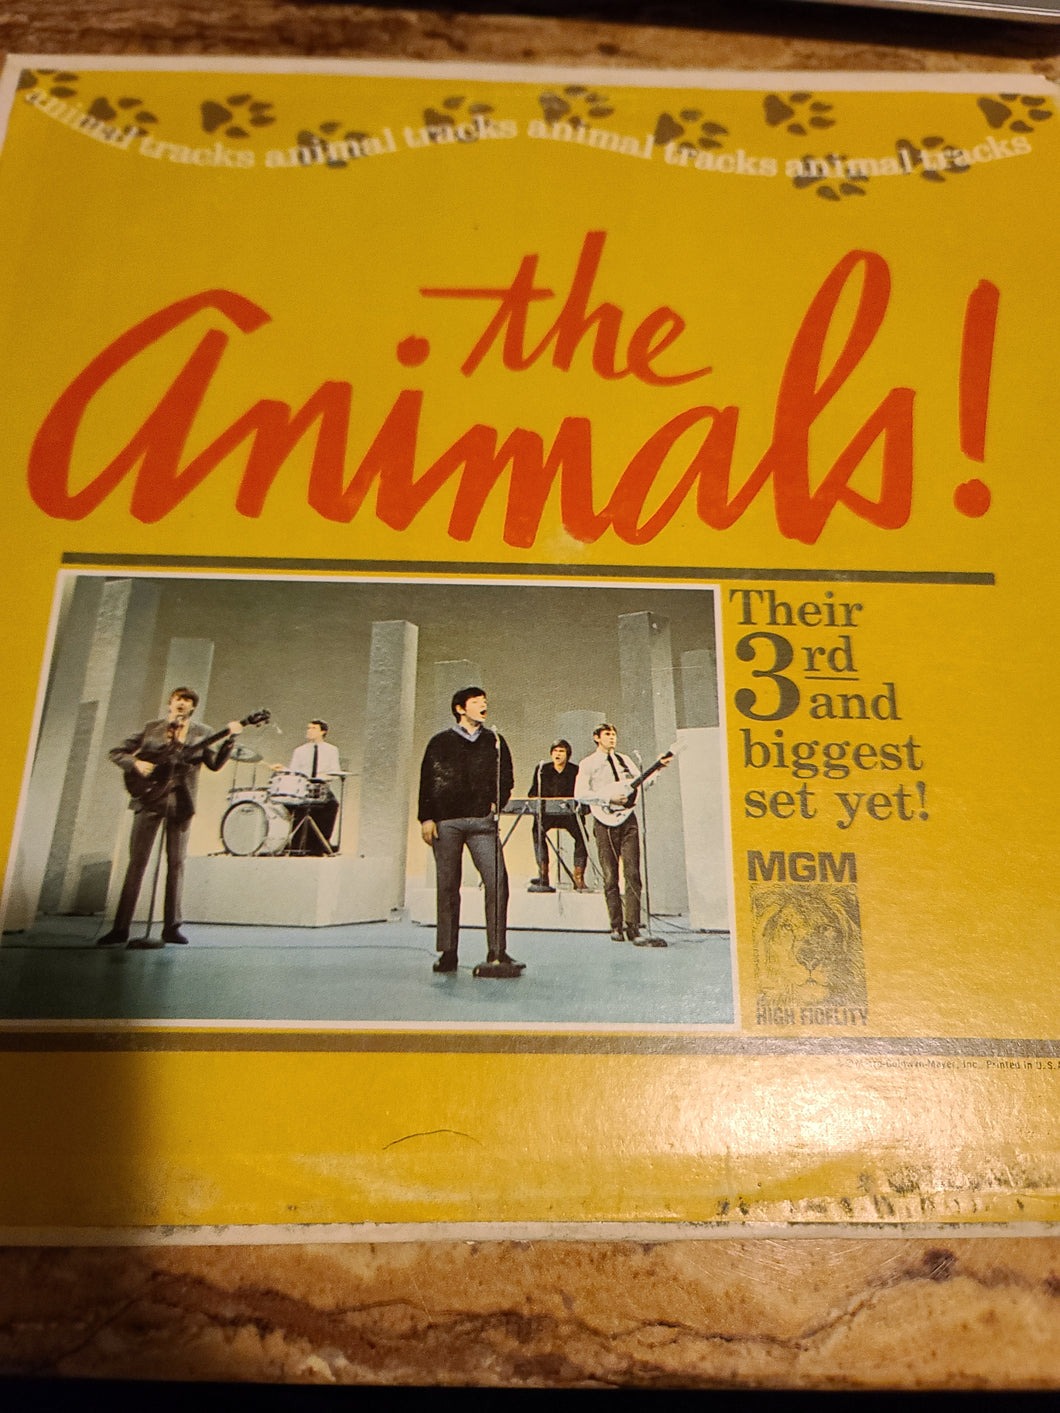 The Animals Animal Tracks original Vinyl